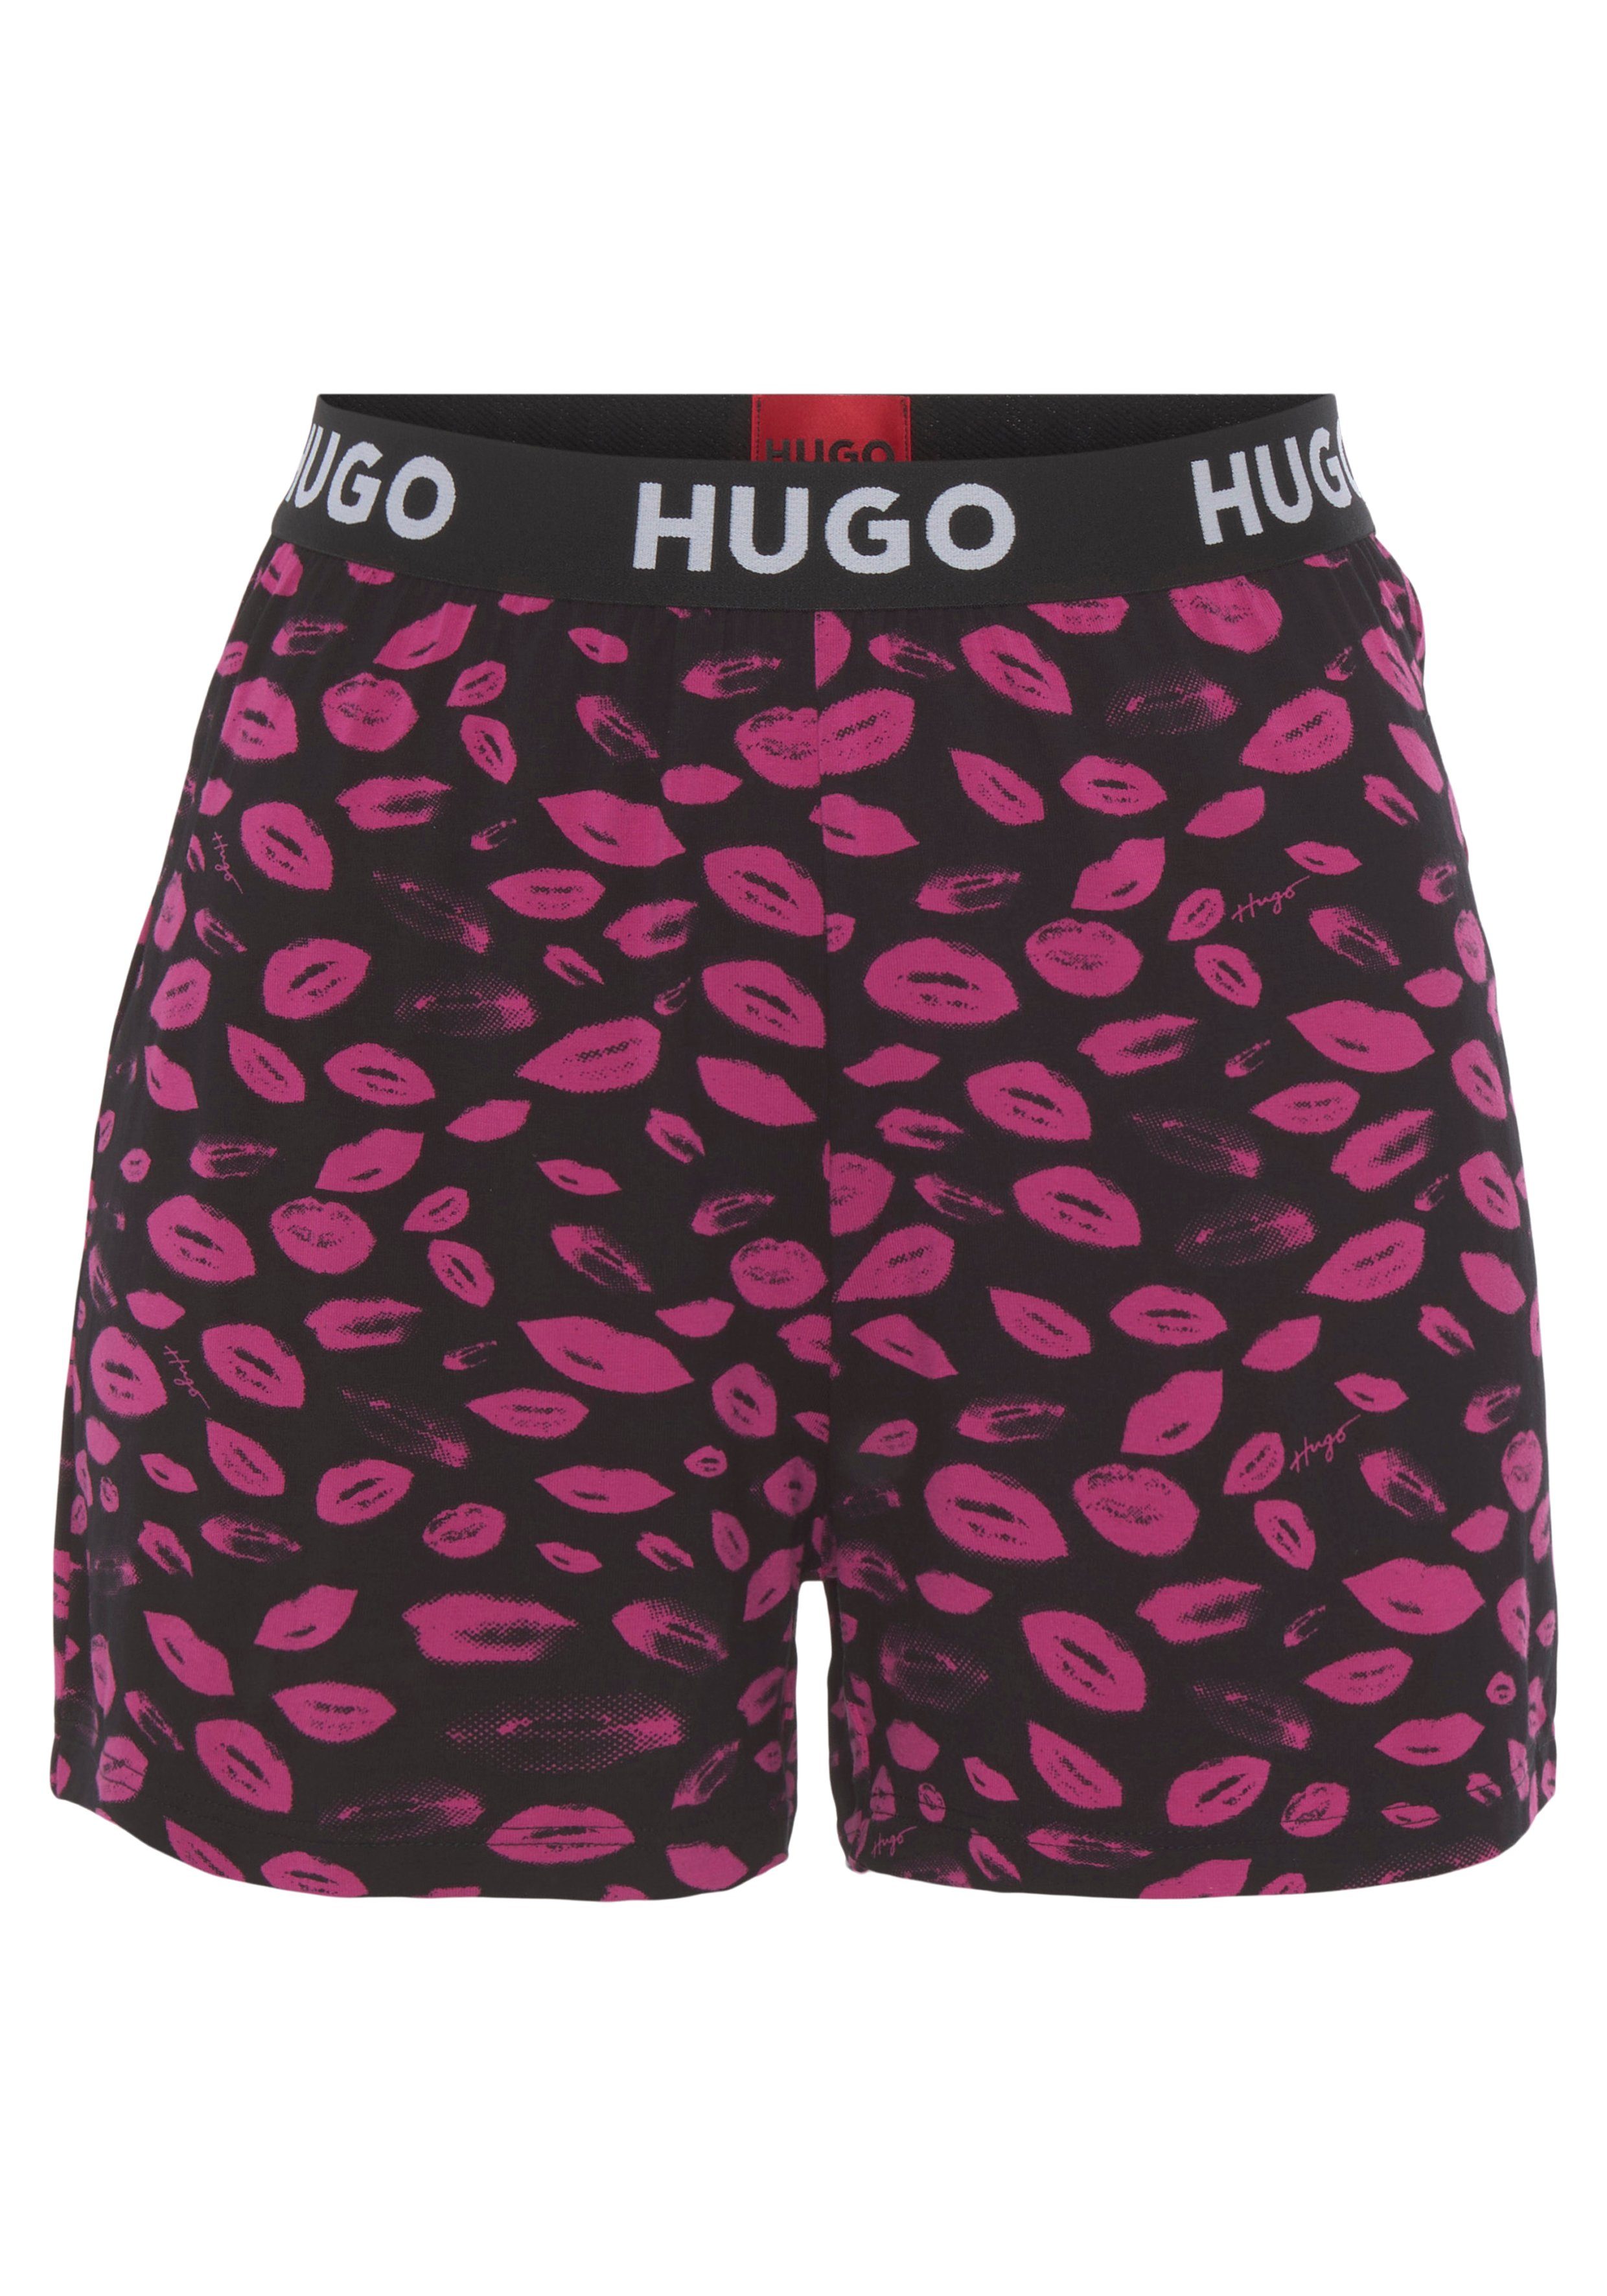 UNITE_SHORTS HUGO Shorts PRINTED